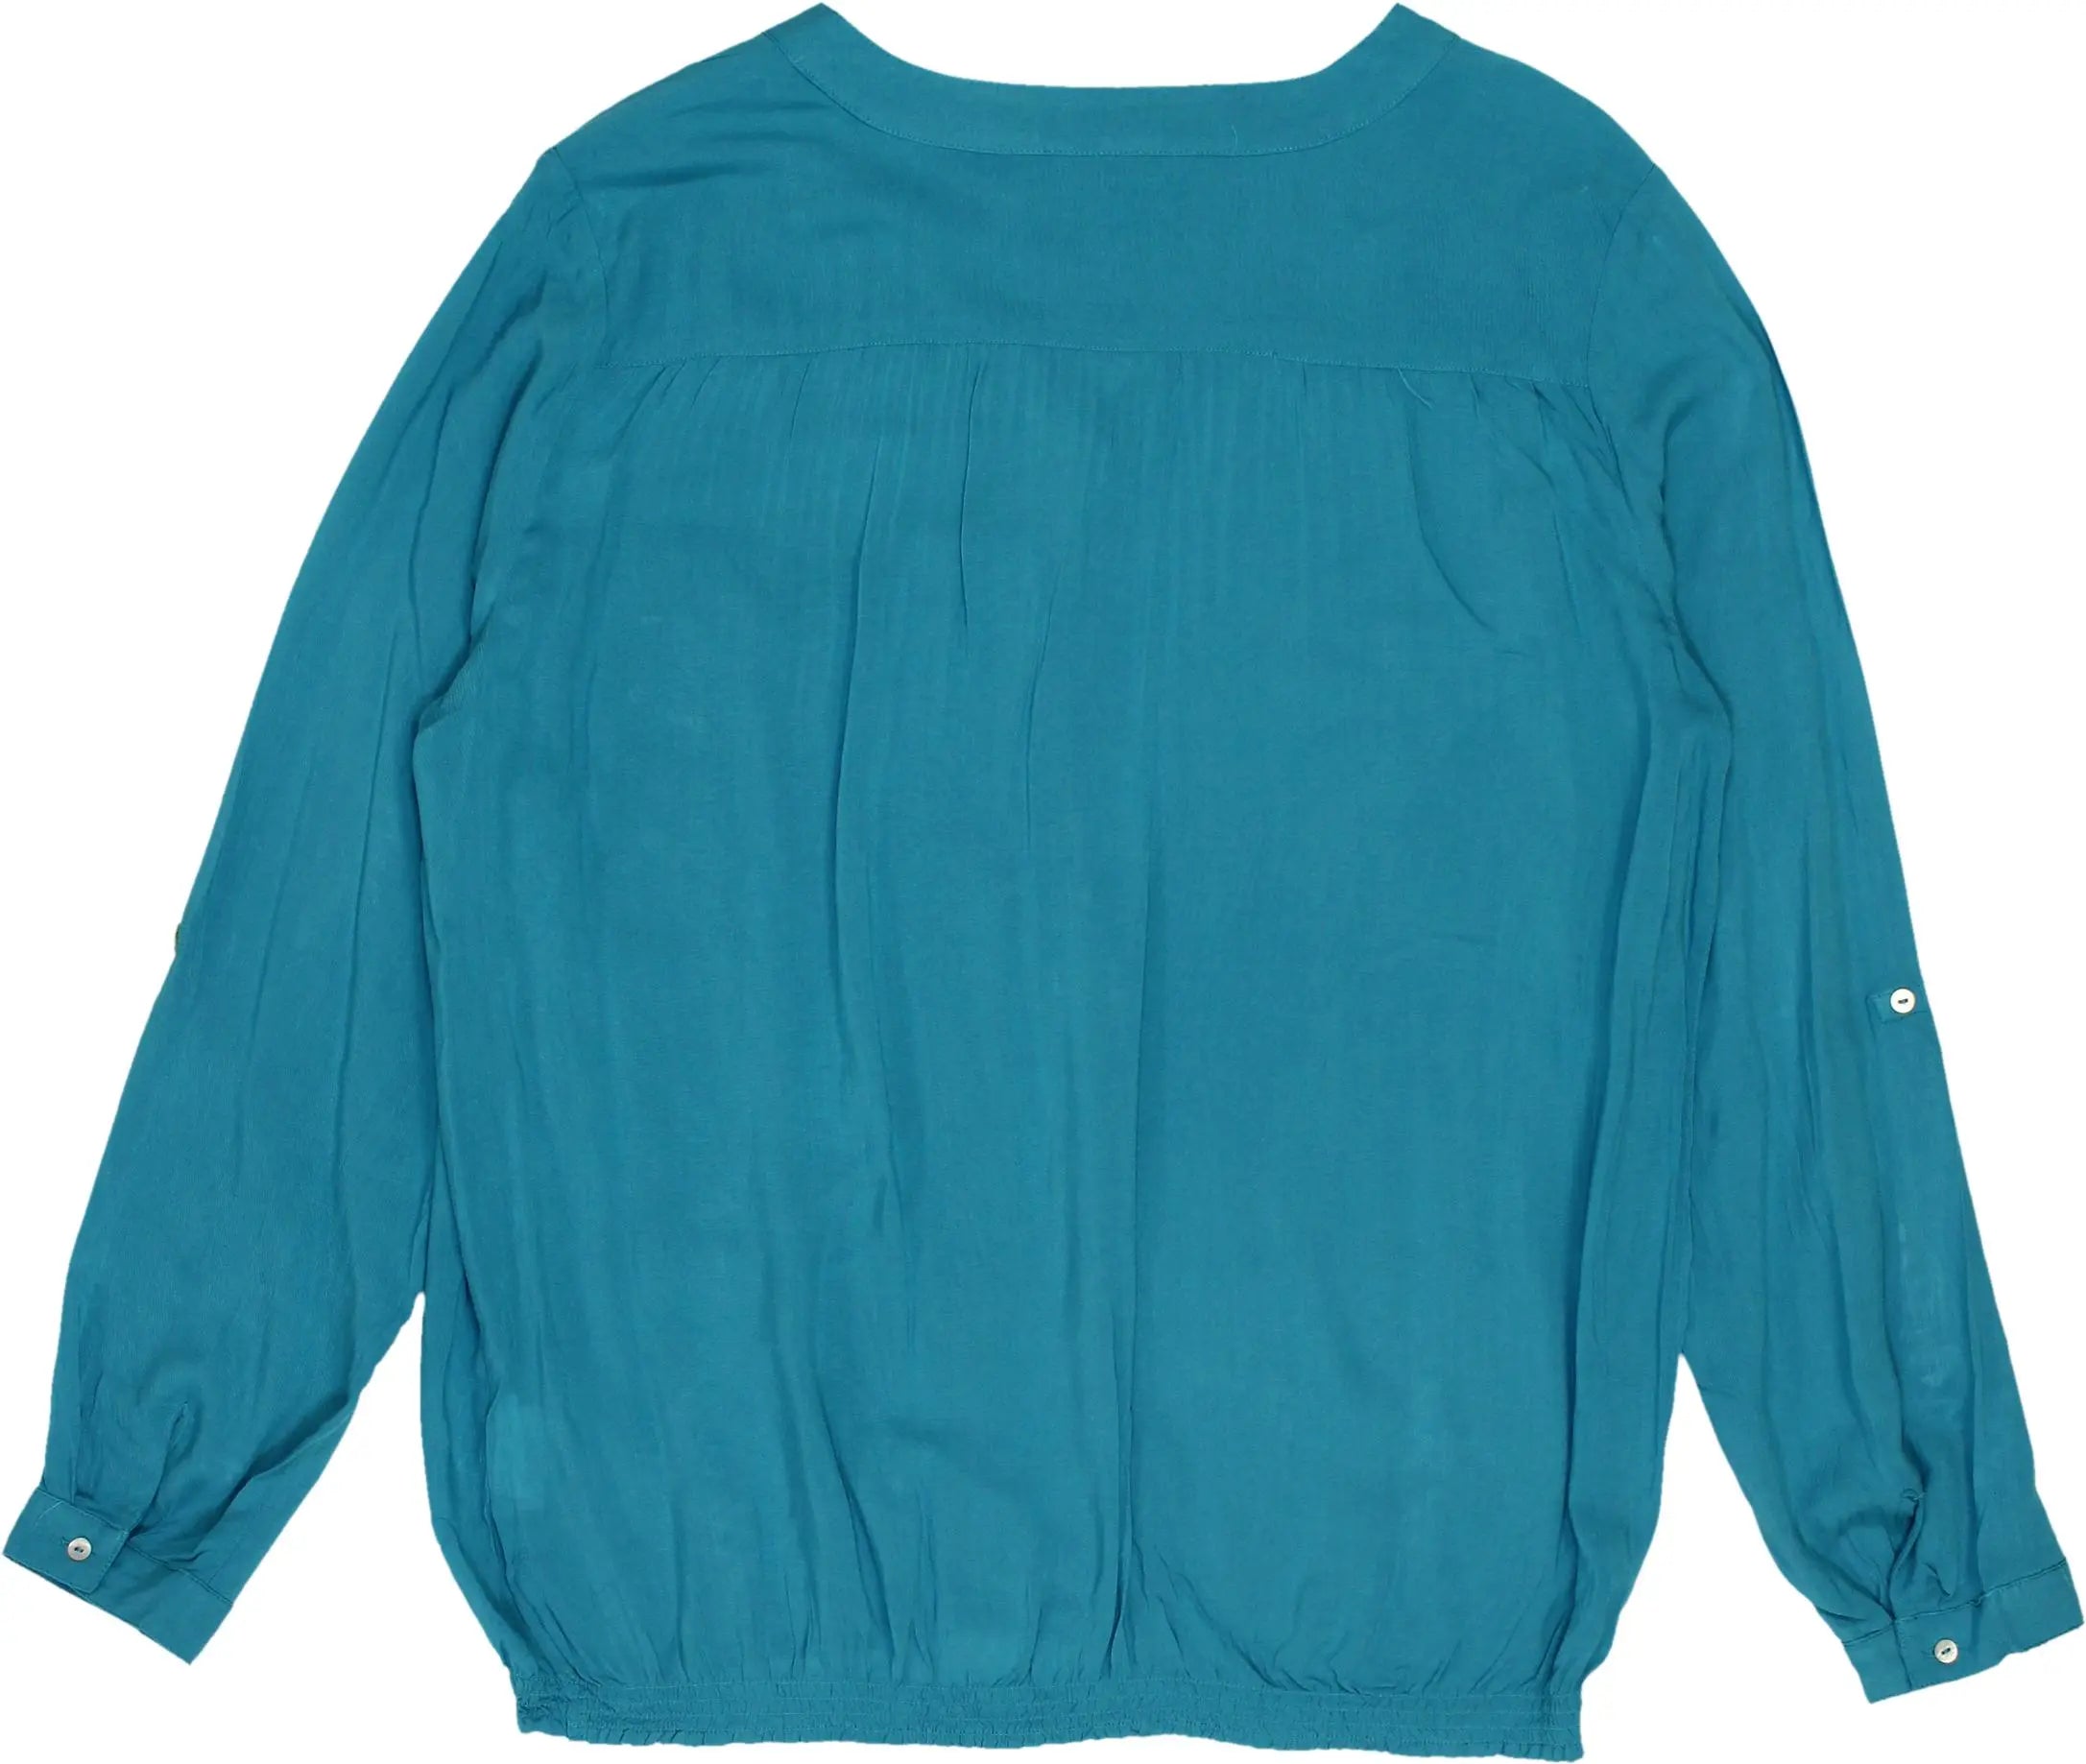 Camaieu - Blue Blouse- ThriftTale.com - Vintage and second handclothing